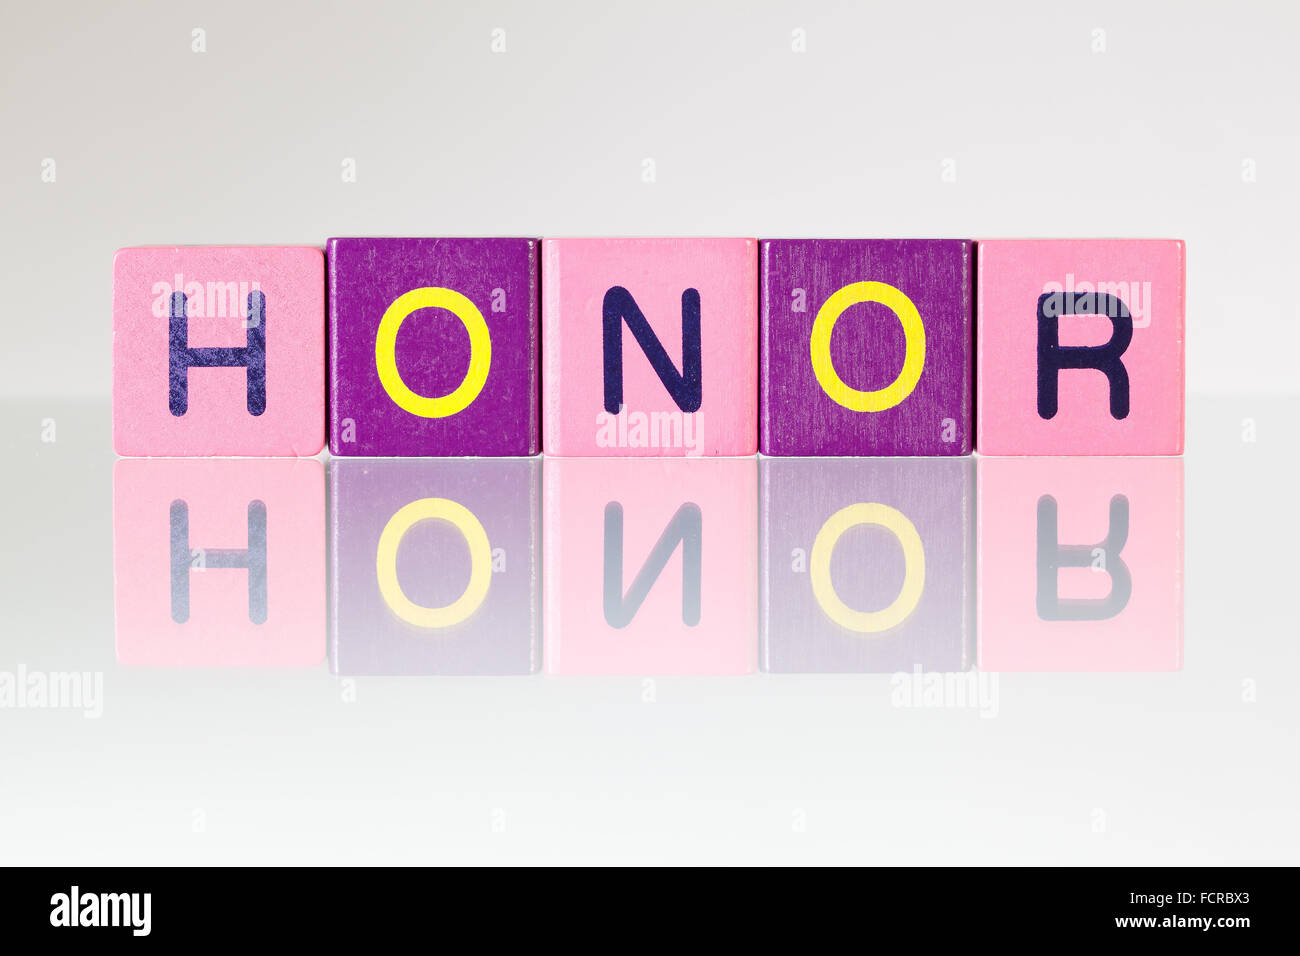 Honor - an inscription from children's wooden blocks Stock Photo